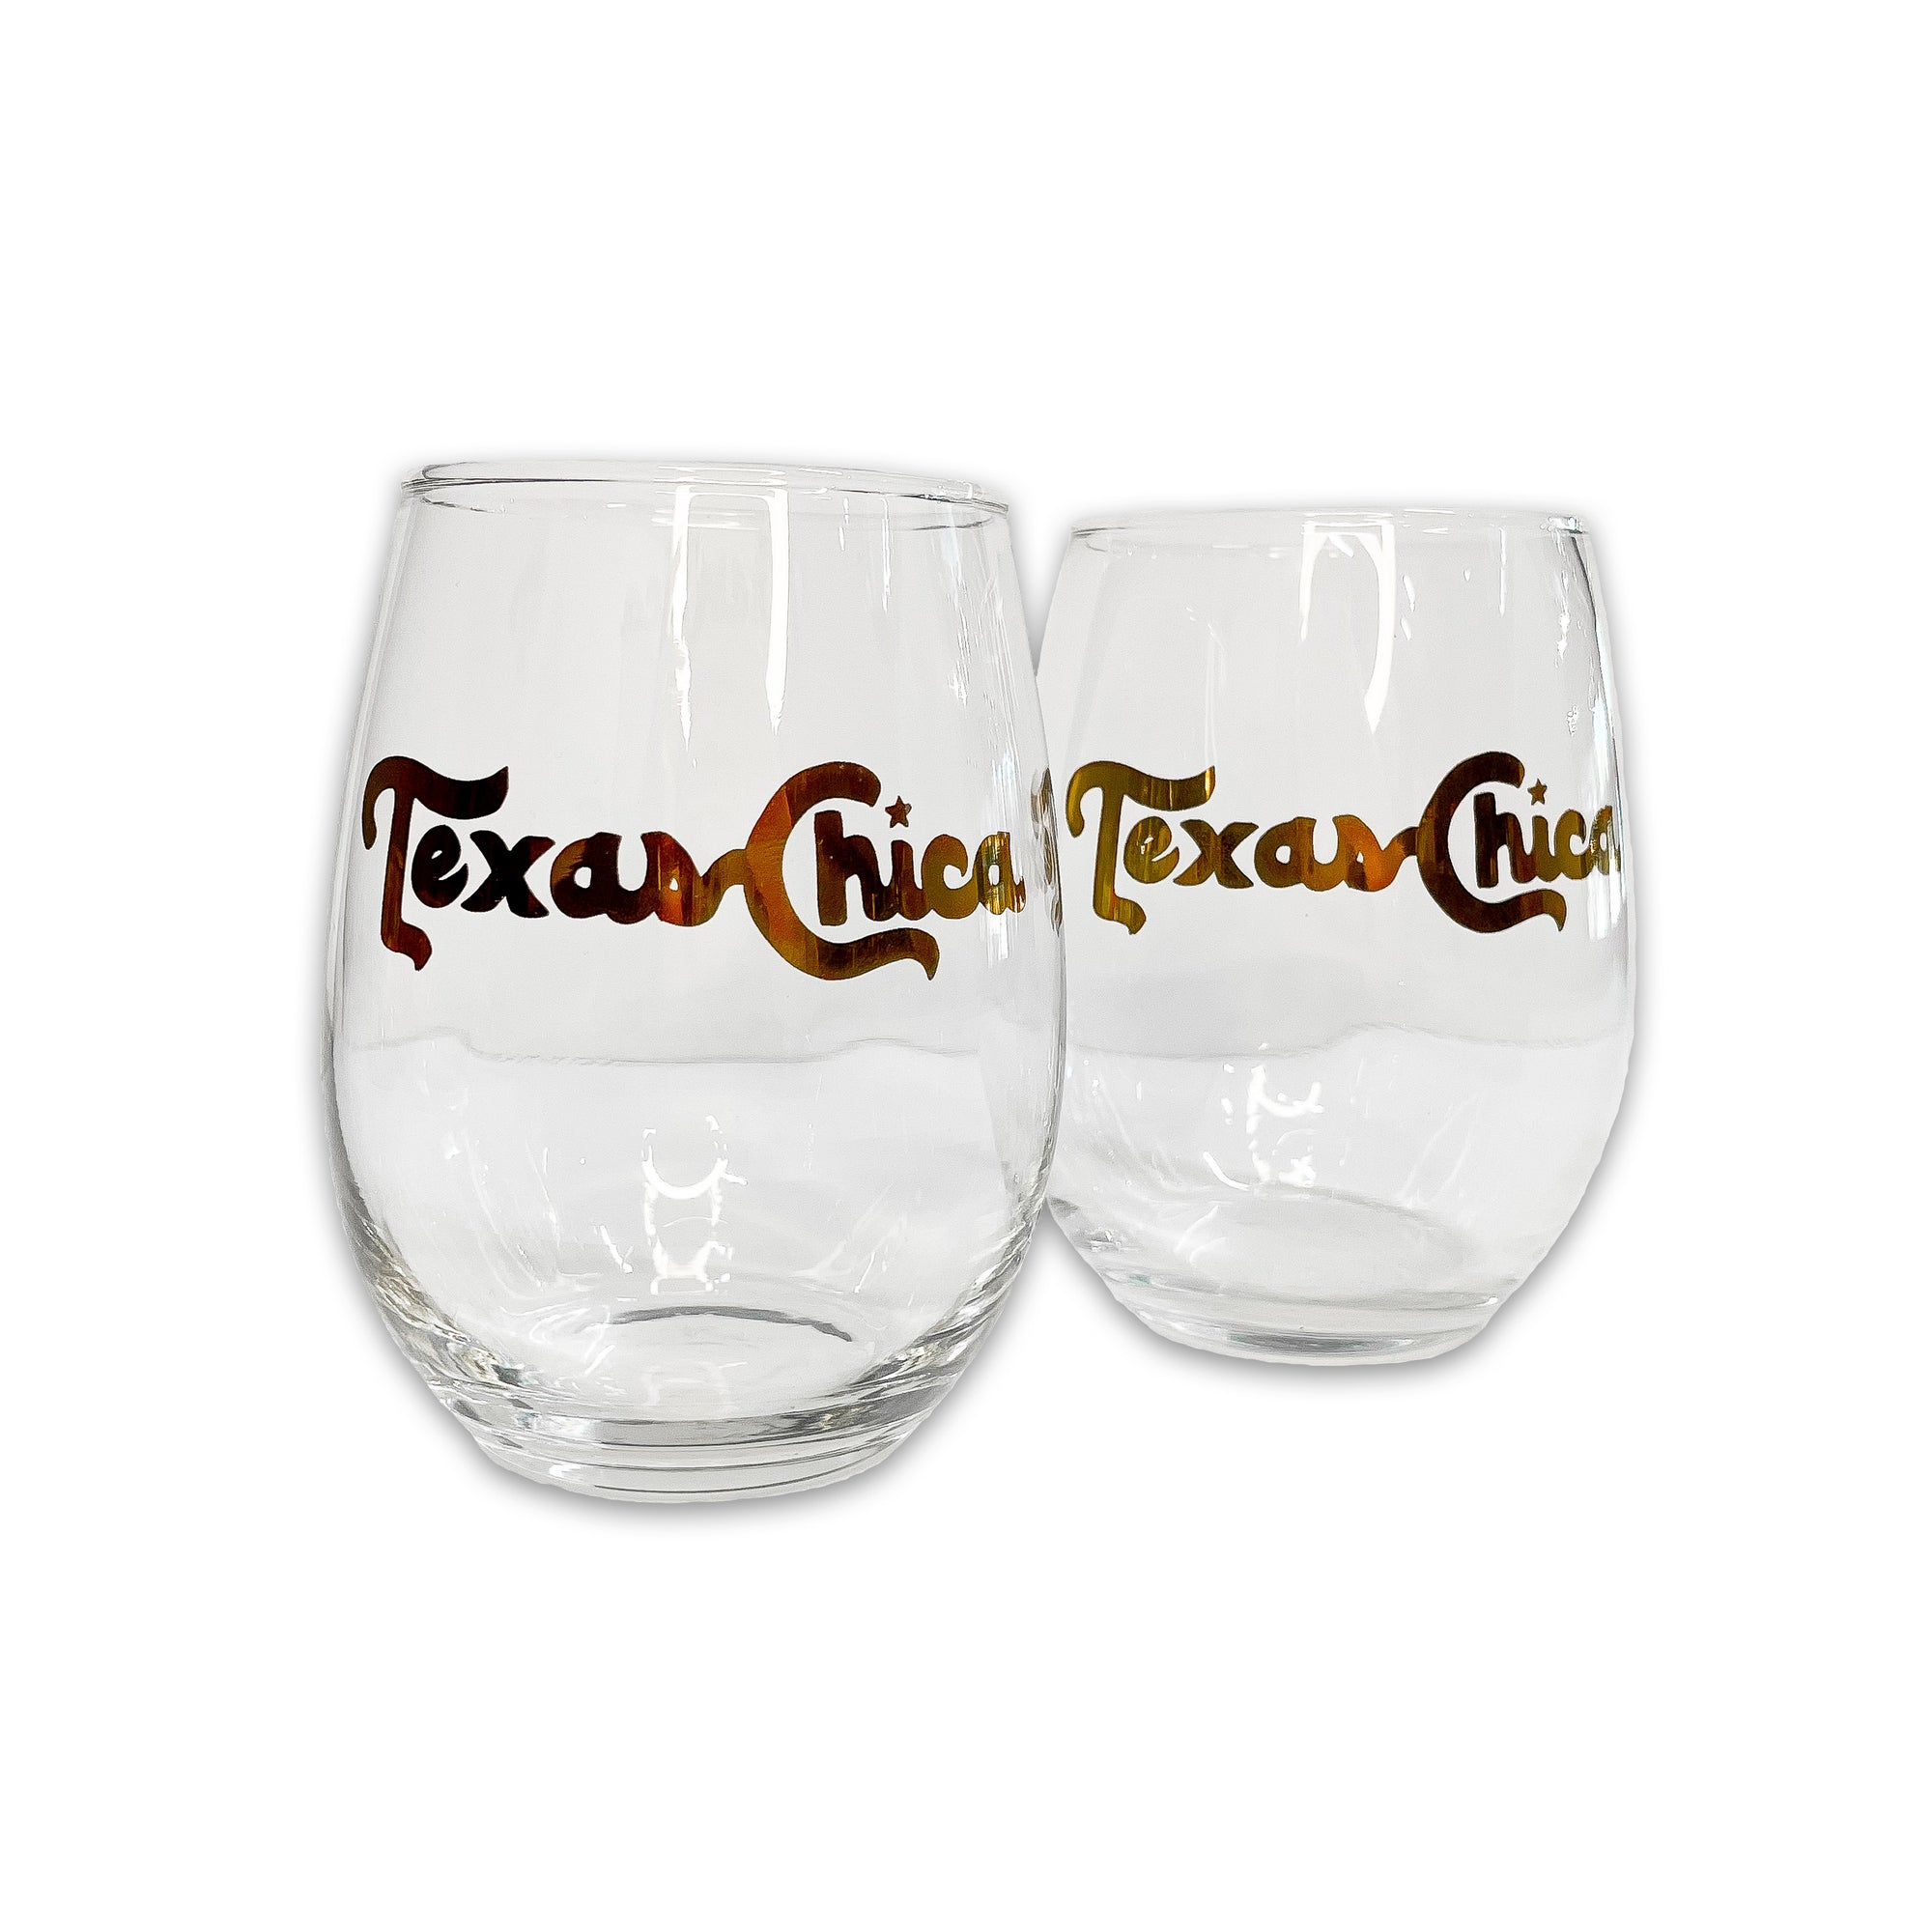 Texas Chica - Stemless Wine Glass